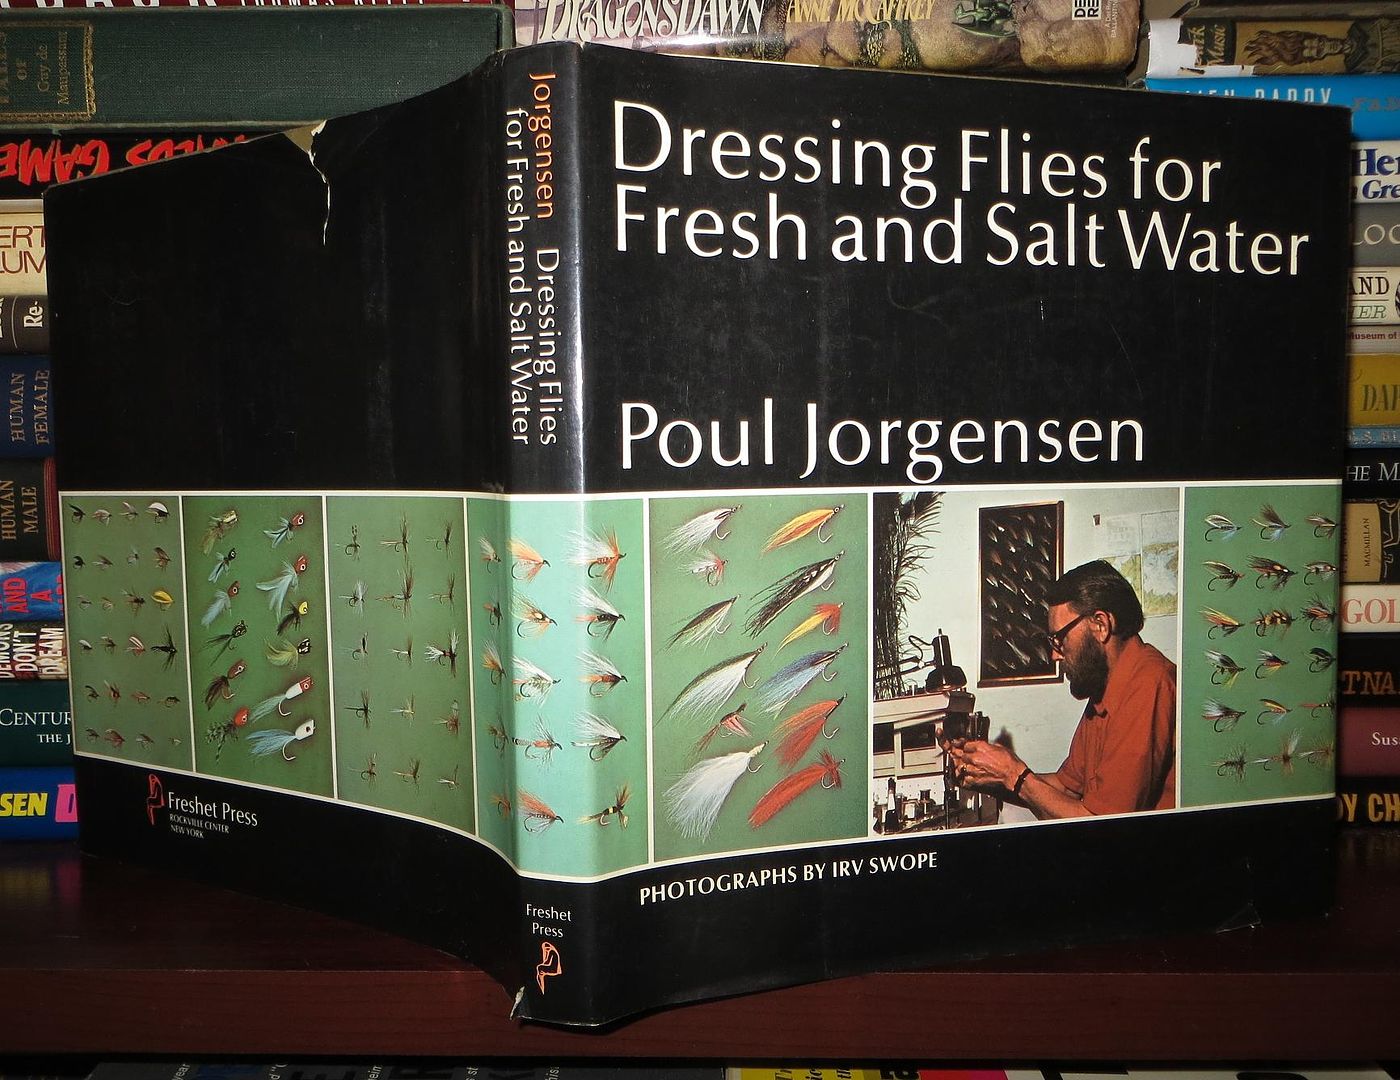 JORGENSEN, POUL - Dressing Flies for Fresh and Salt Water